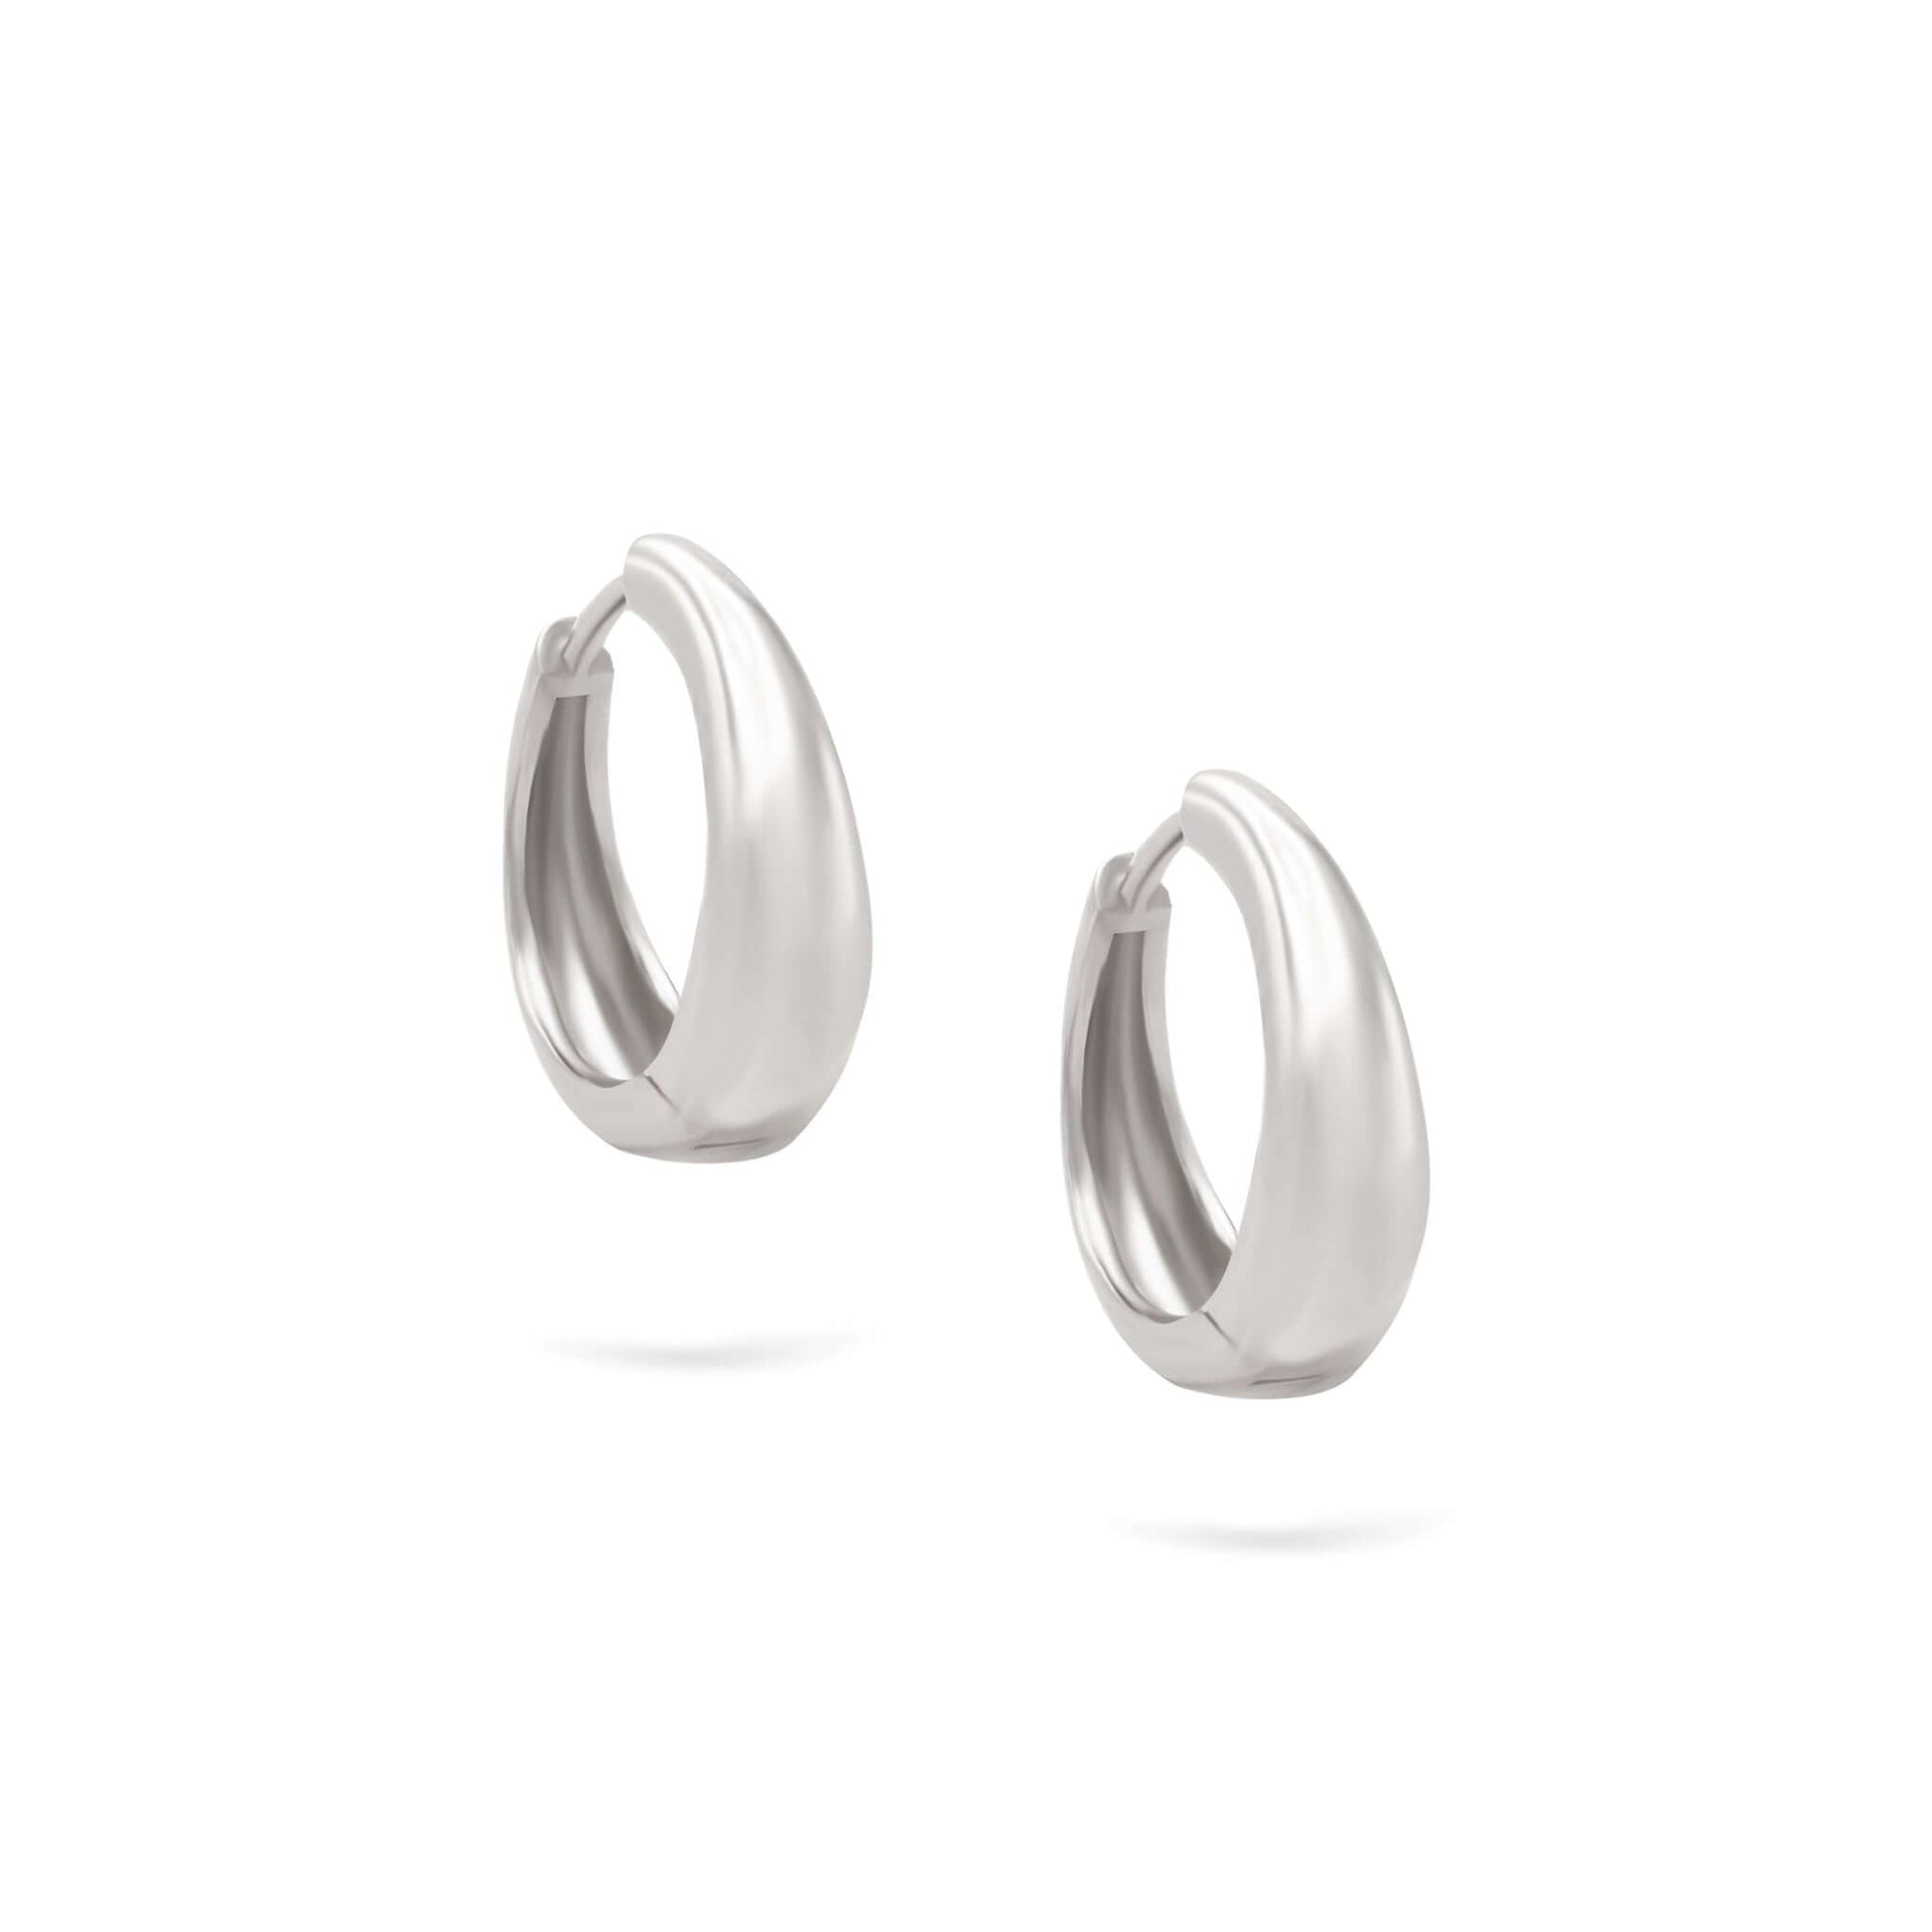 Jewelry Goldens Hoops | Gold Earrings | 14K - White / Pair - earrings Zengoda Shop online from Artisan Brands